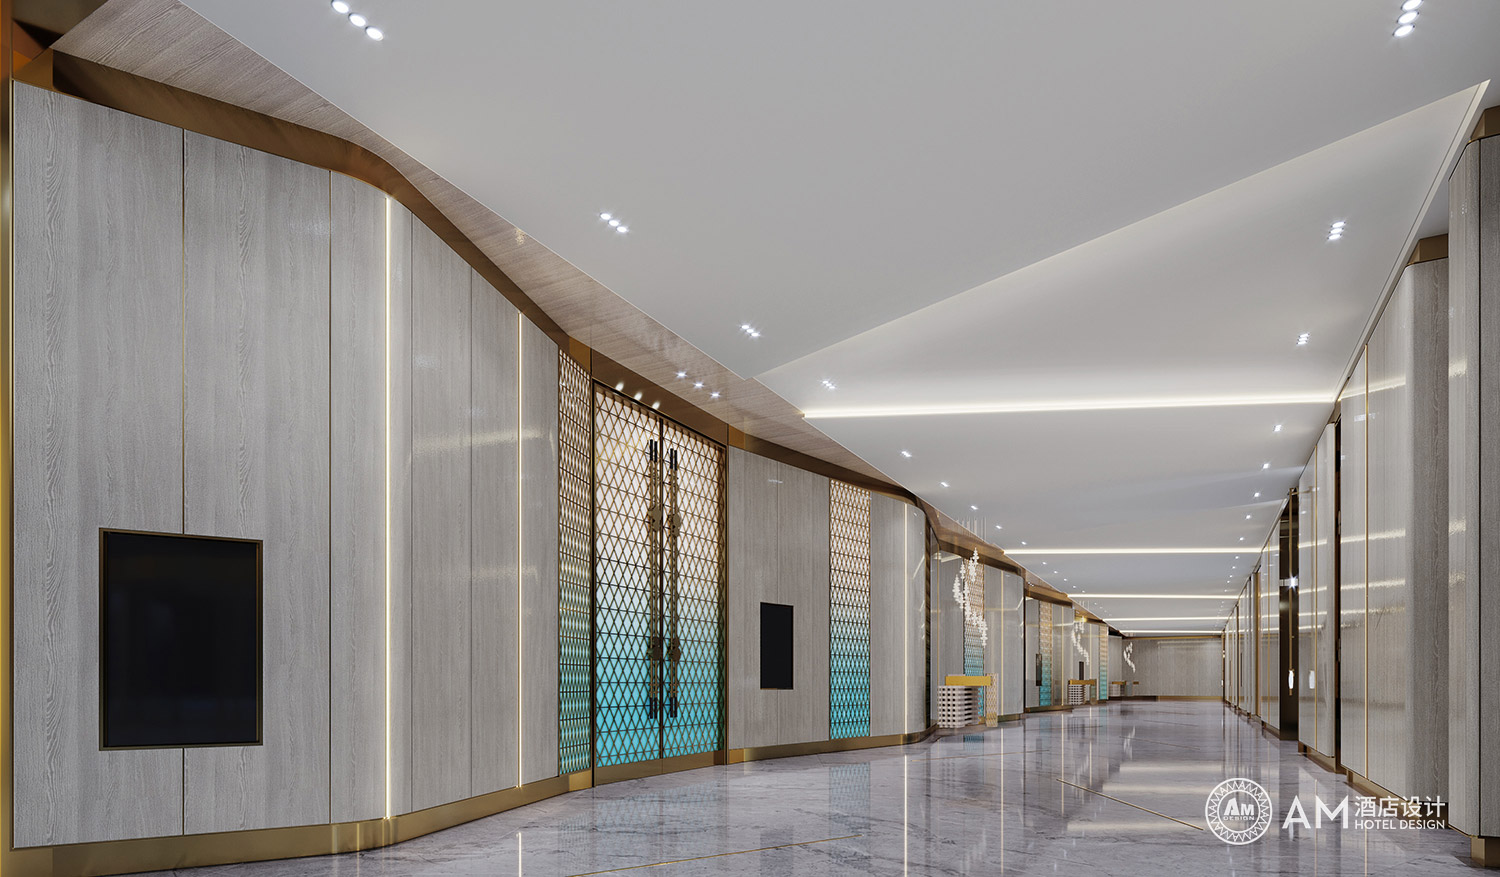 AM DESIGN | Design of the corridor of Huludao grand beauty Hotel